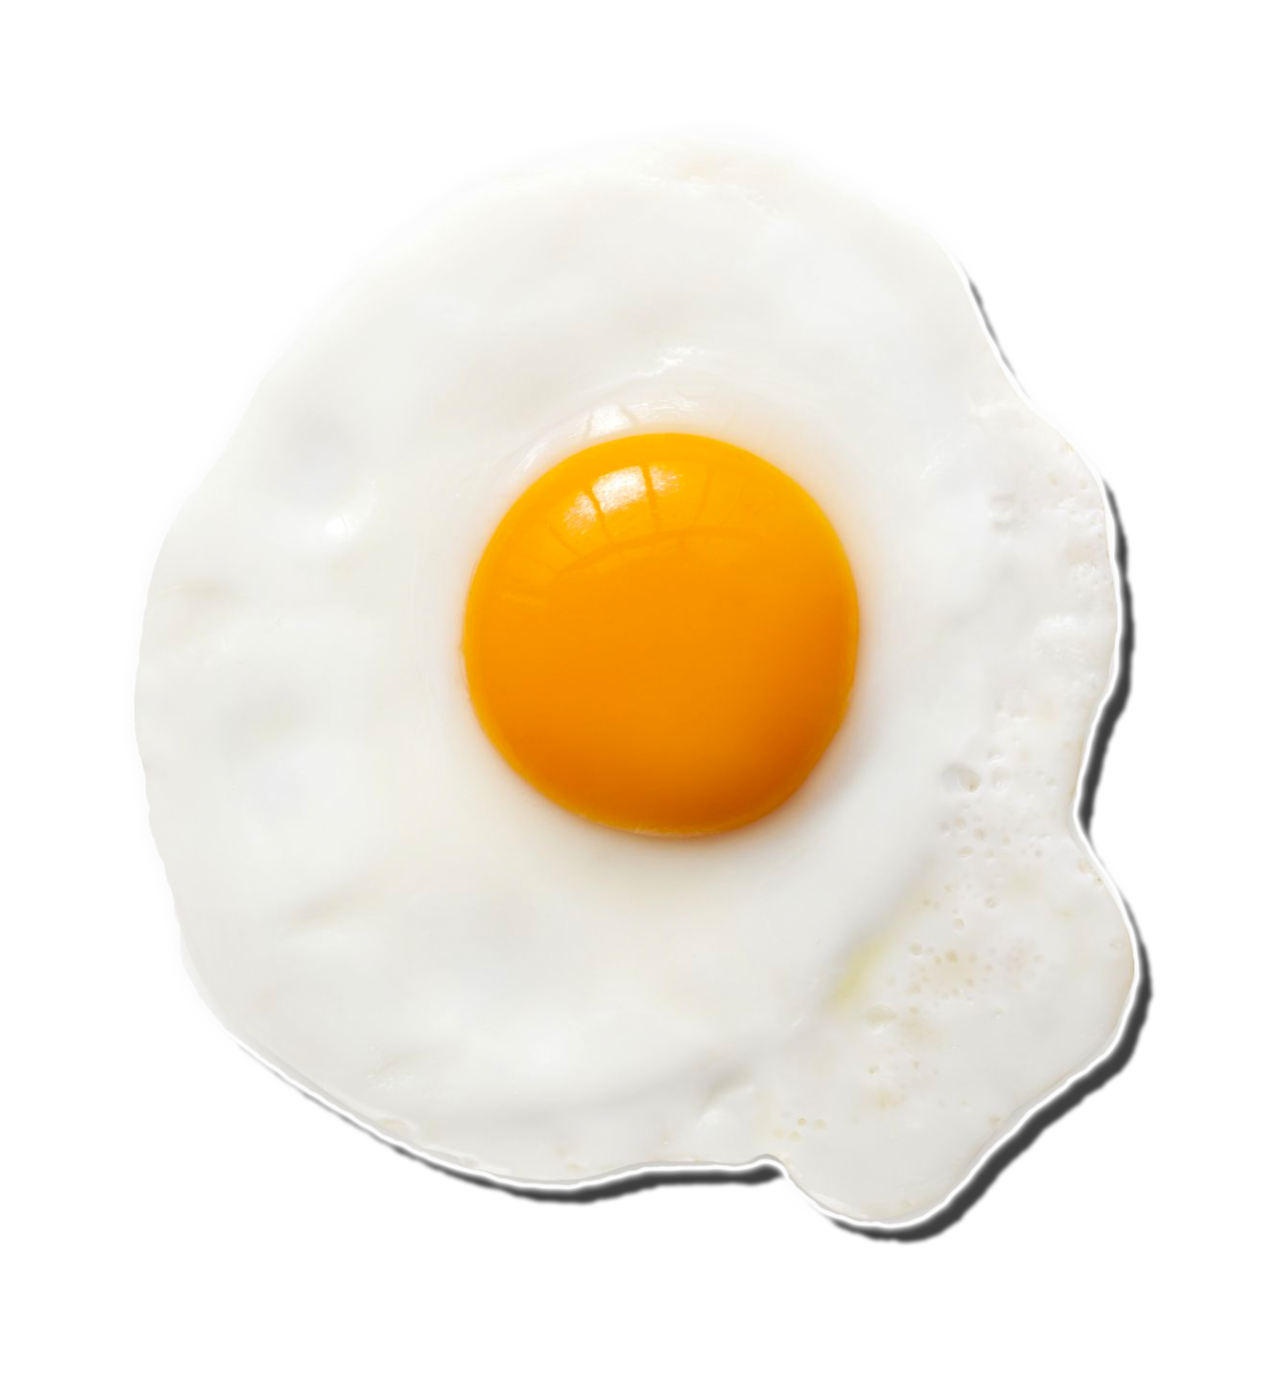 Medio huevo frito PNG imagen de alta calidad